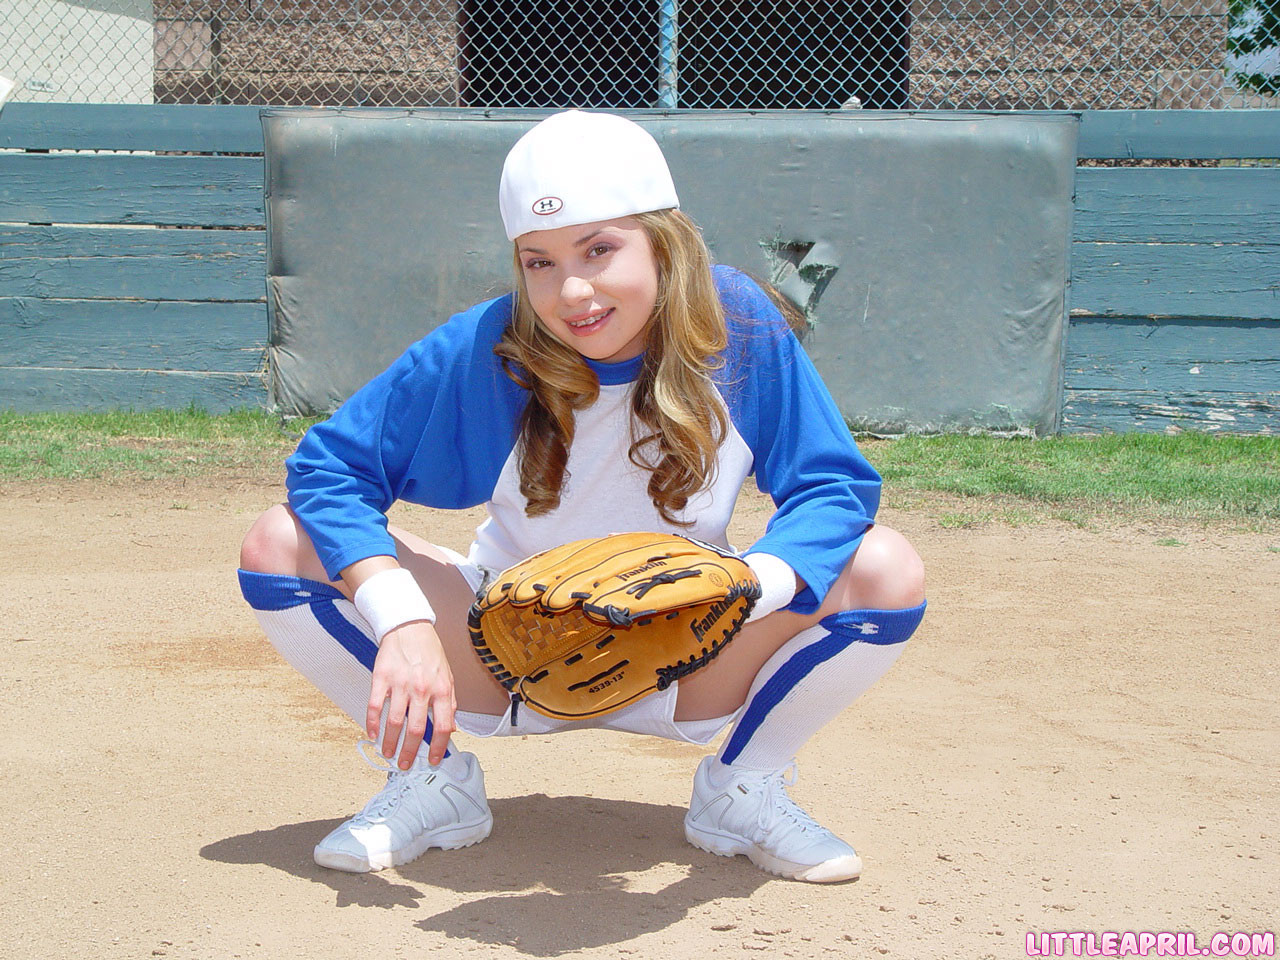 April looking cute in her baseball uniform #68111095